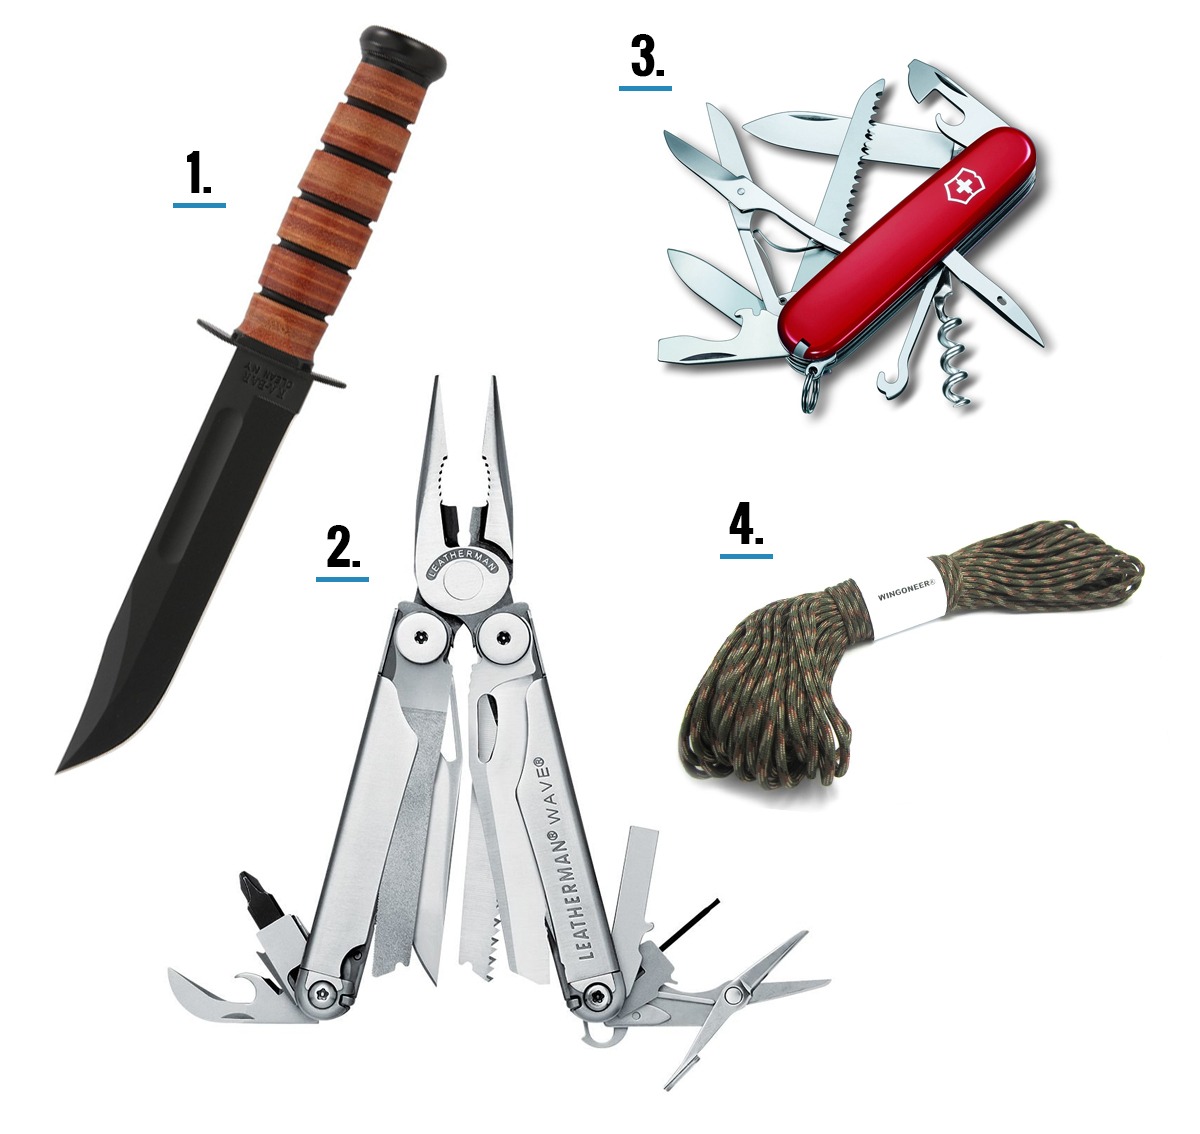 Bug out bag essentials - tools